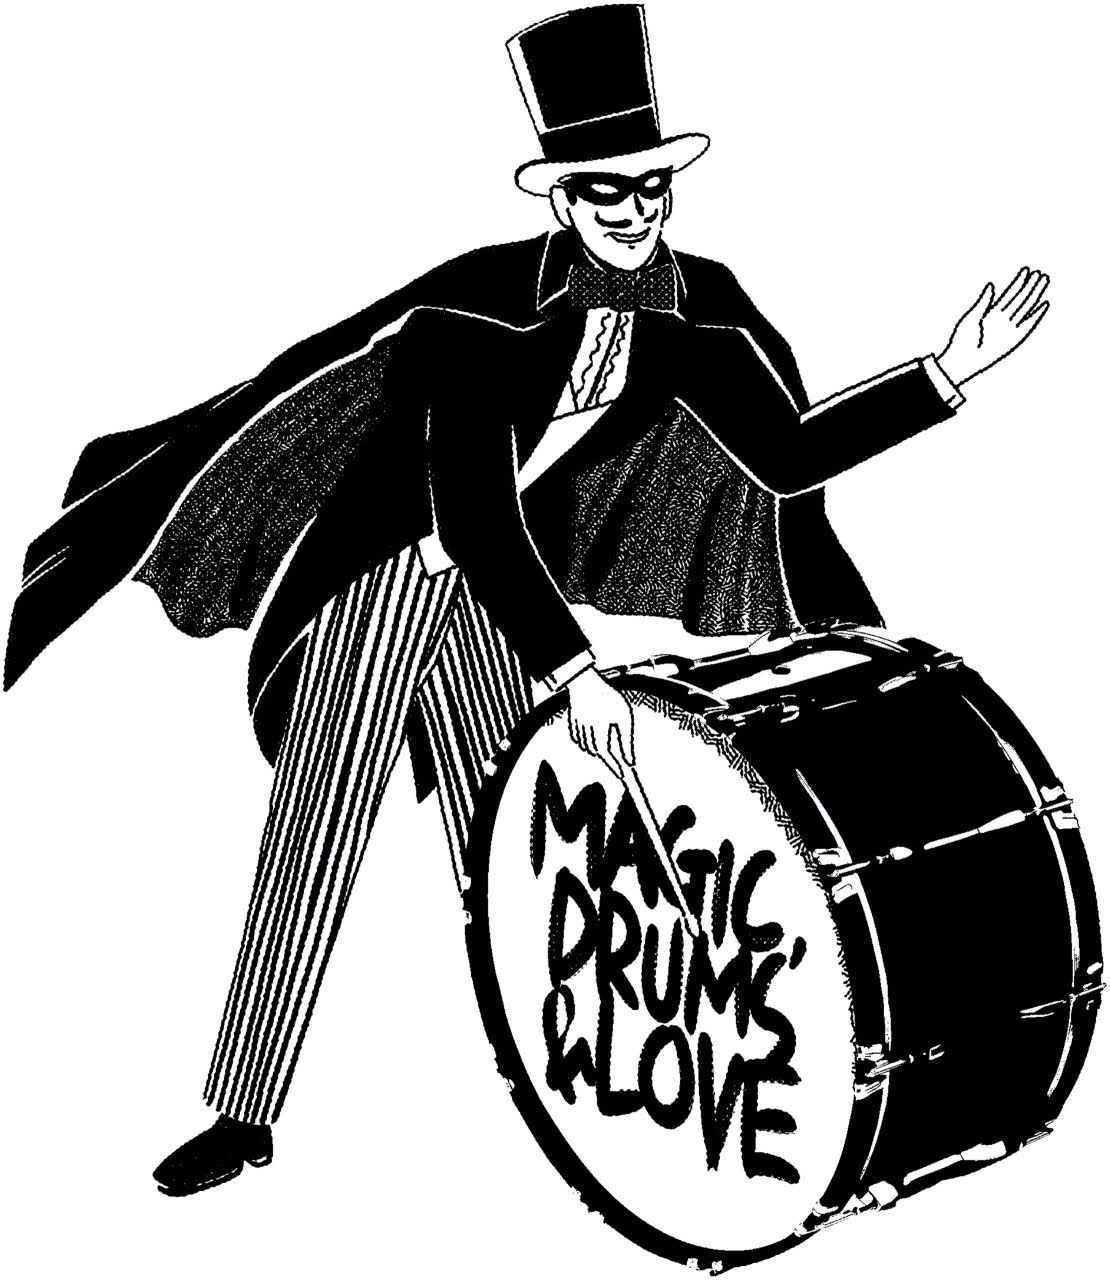 Magic, Drums & Love